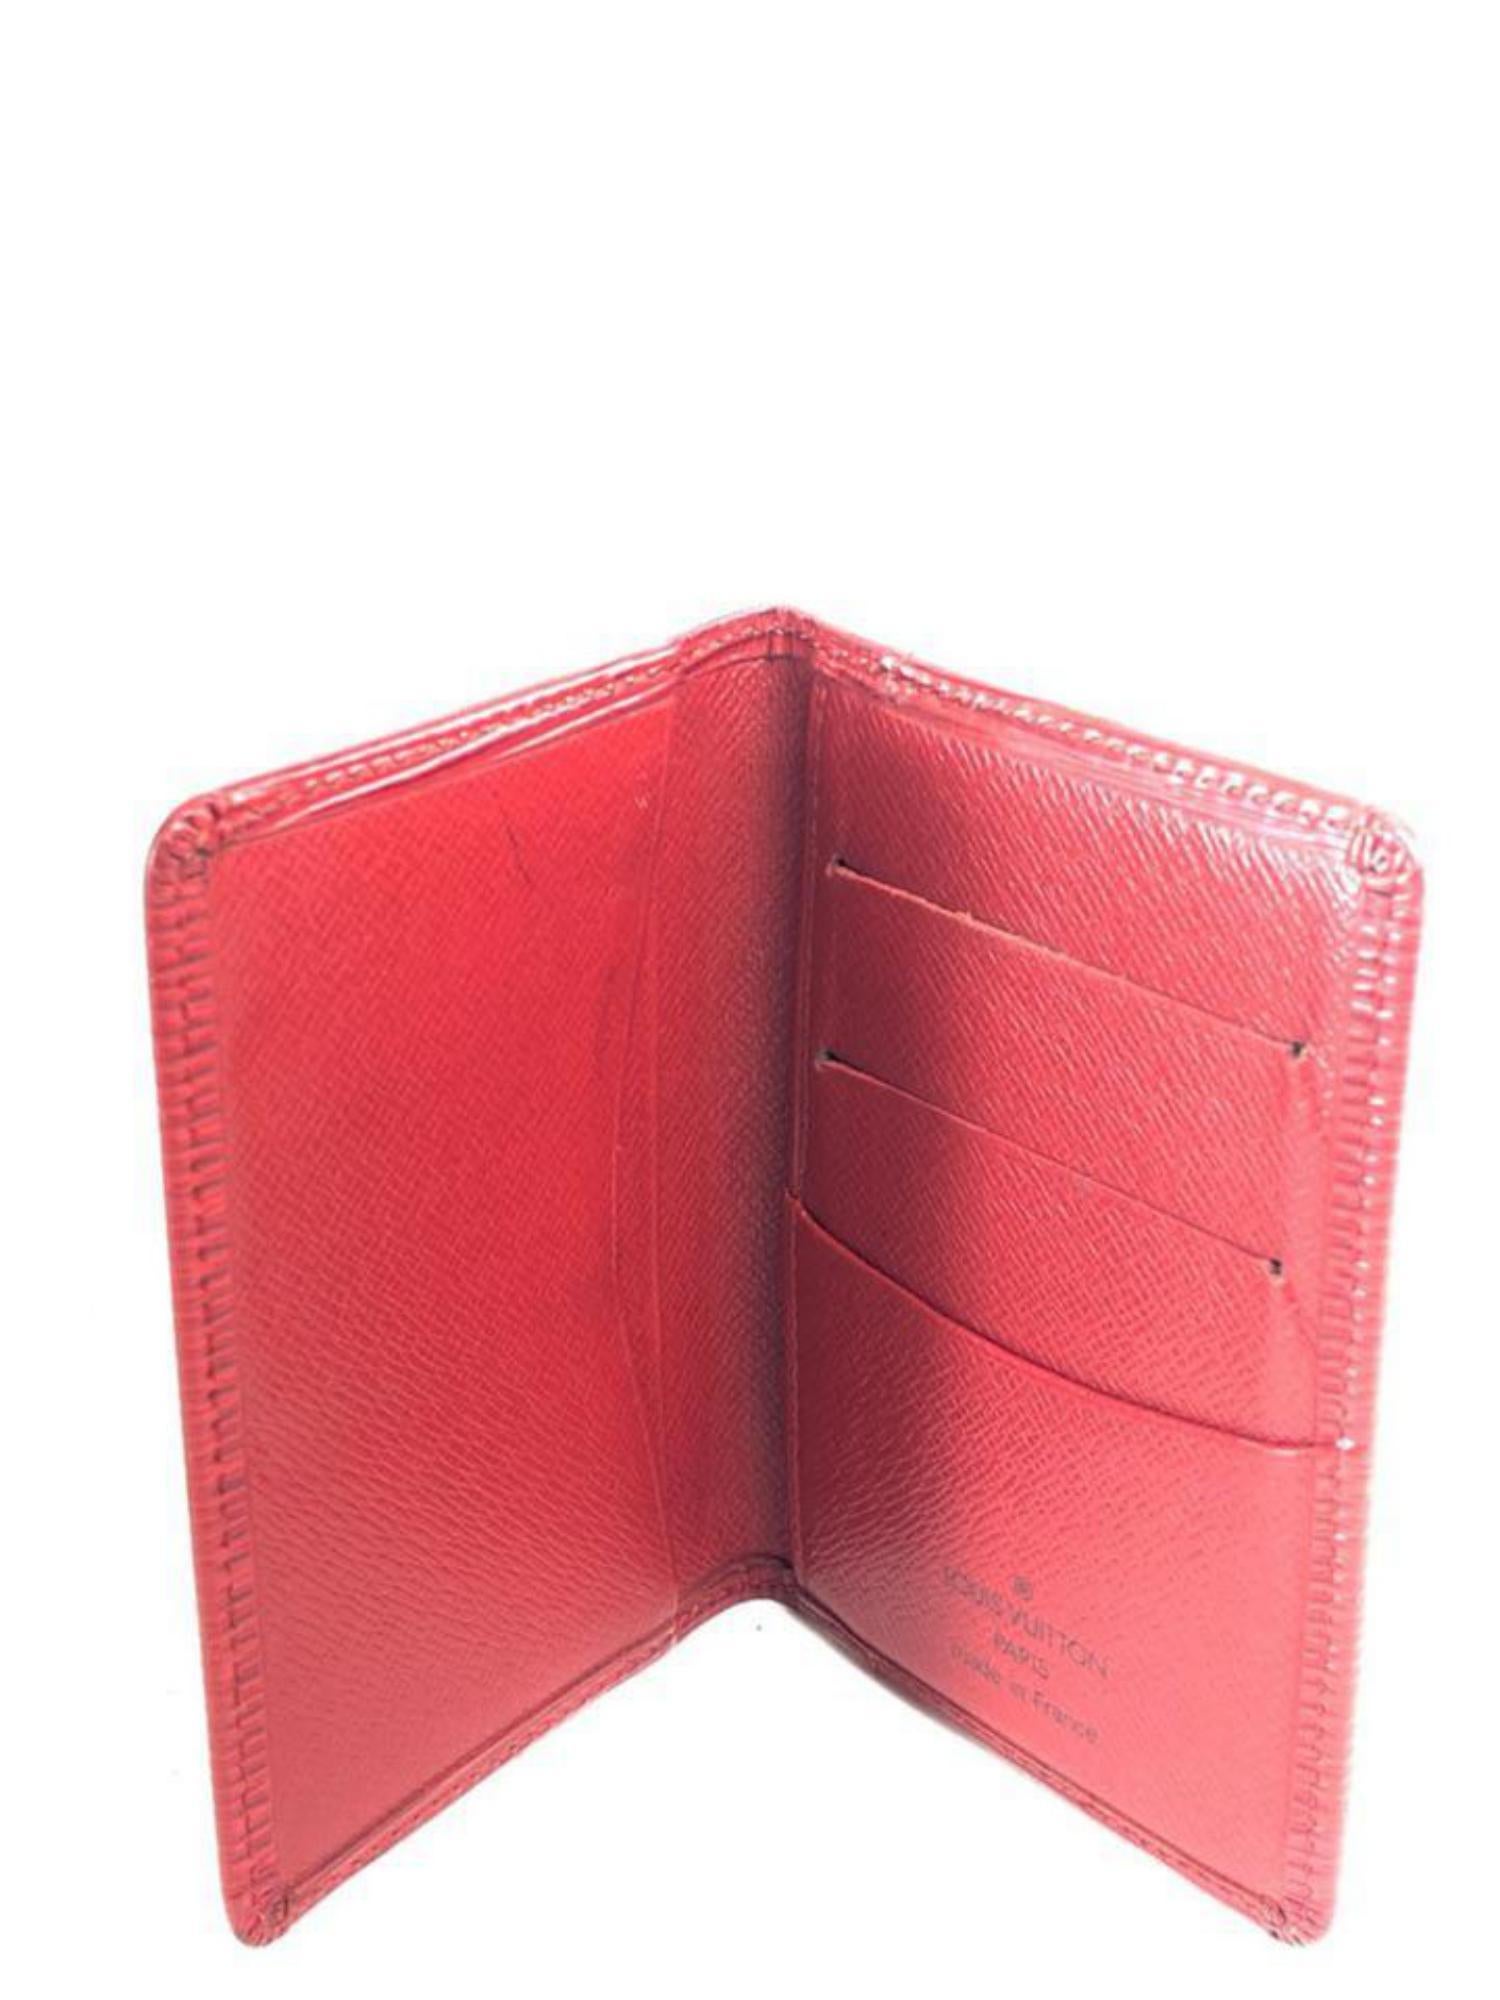 Louis Vuitton Red Epi Leather Card Case Wallet Holder 5LVL1223 3